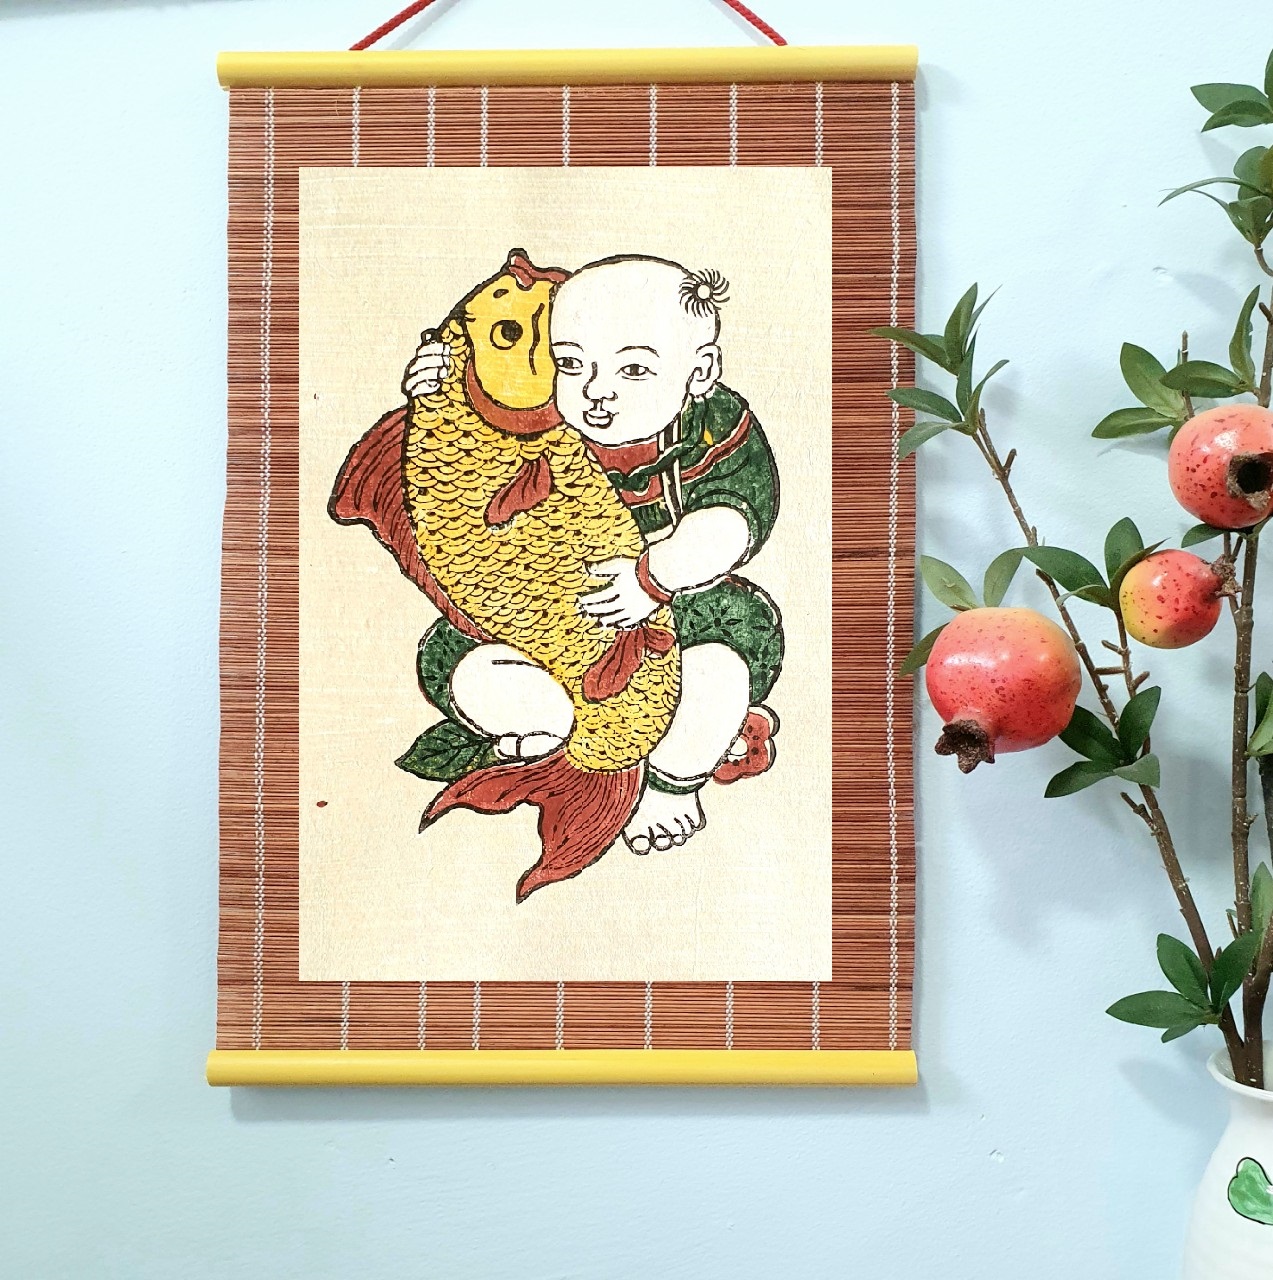 Little Boy Holding Carp - Dong Ho folk woodcut painting